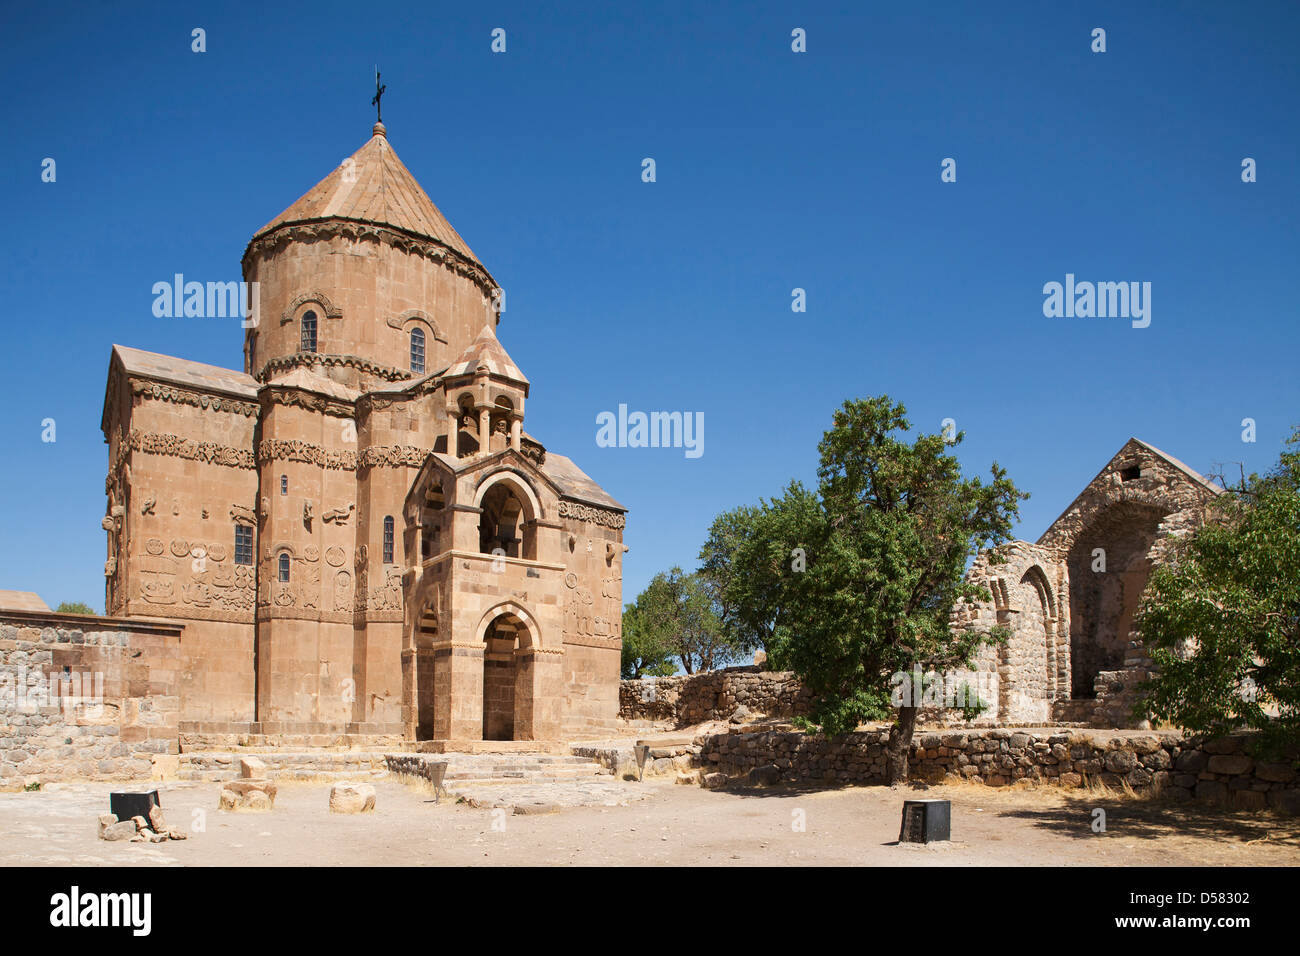 church of the holy cross, armenian cathedral, akdamar island, lake van, south-eastern anatolia, turkey, asia Stock Photo